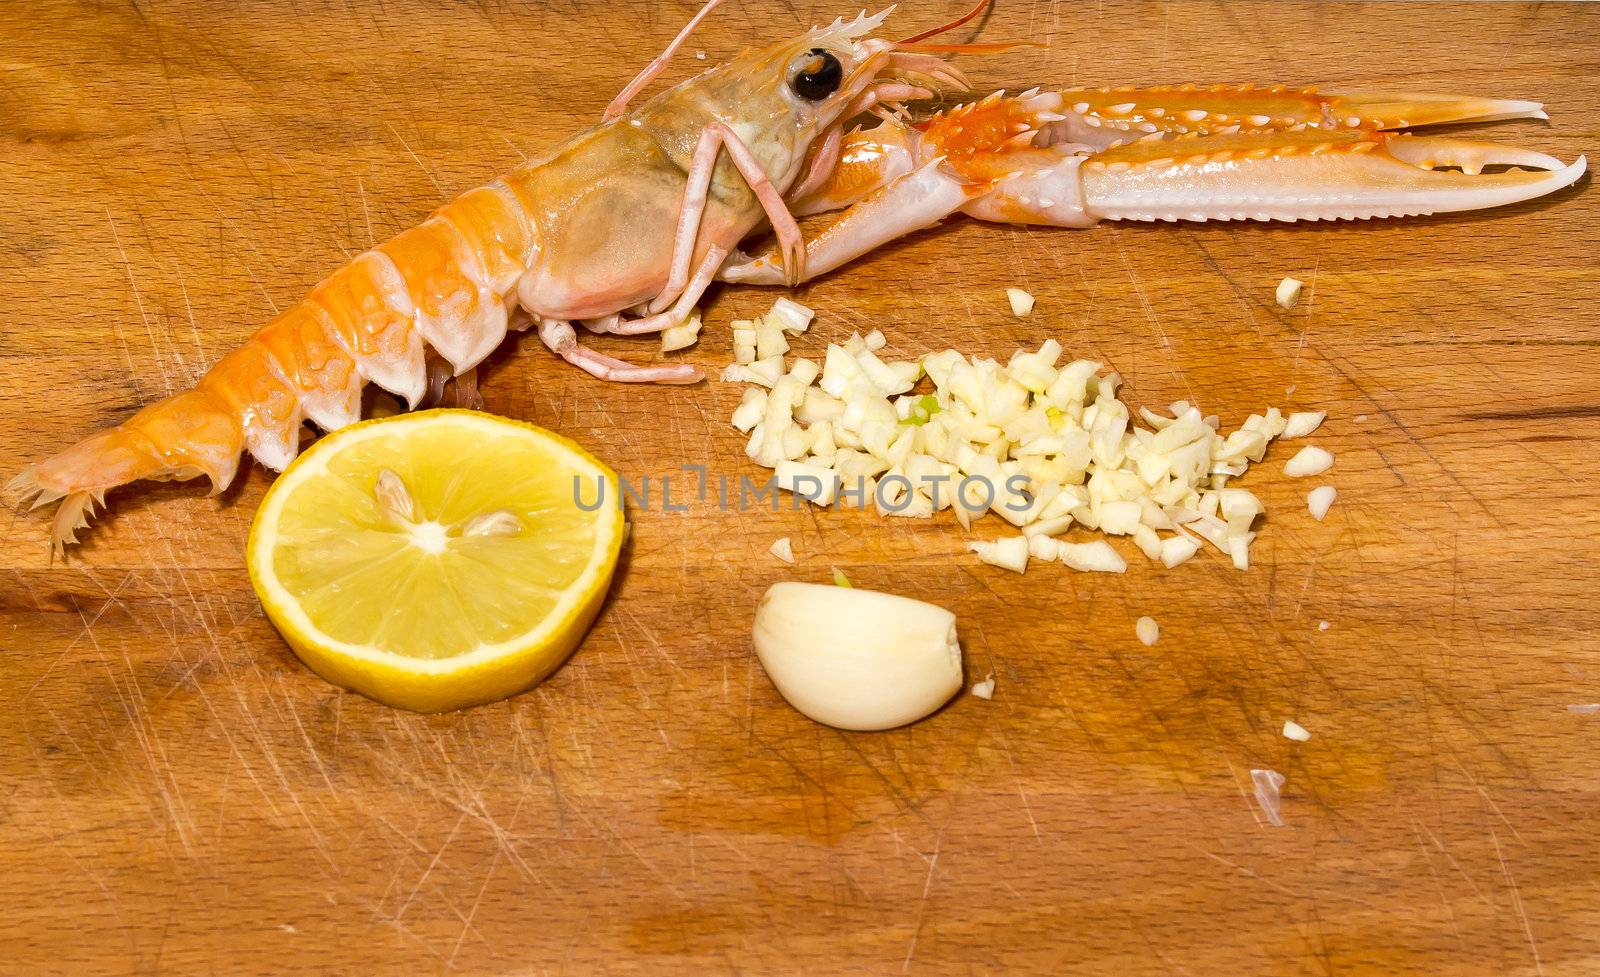 shrimp witl lemon and garlic on wooden table